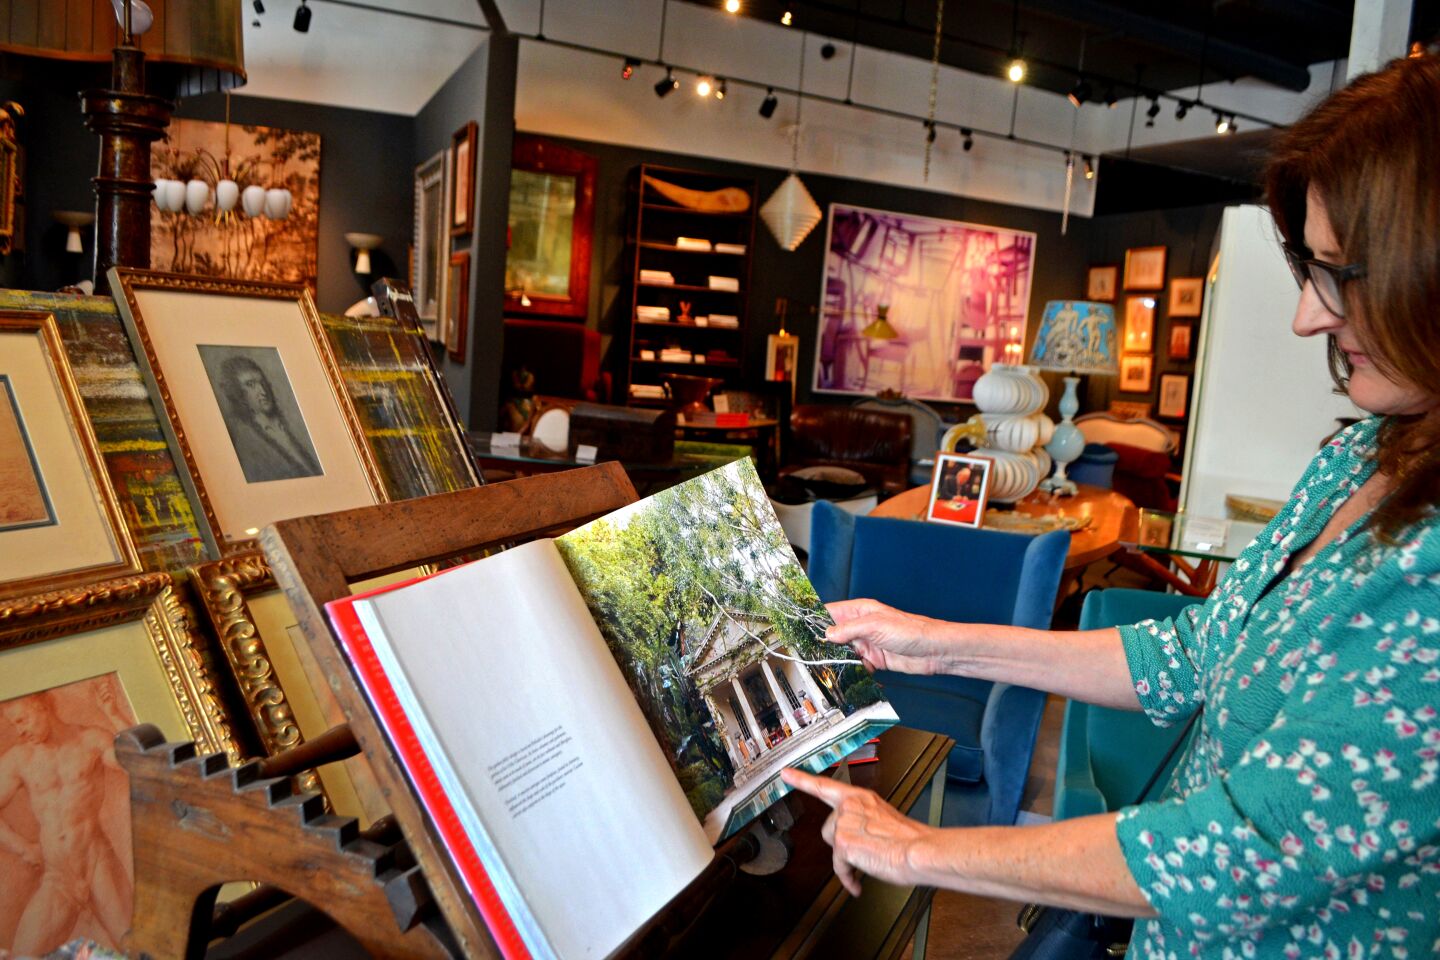 Kathryn Ireland at Richard Shapiro's La Cienega store perusing his book, "Past Perfect."